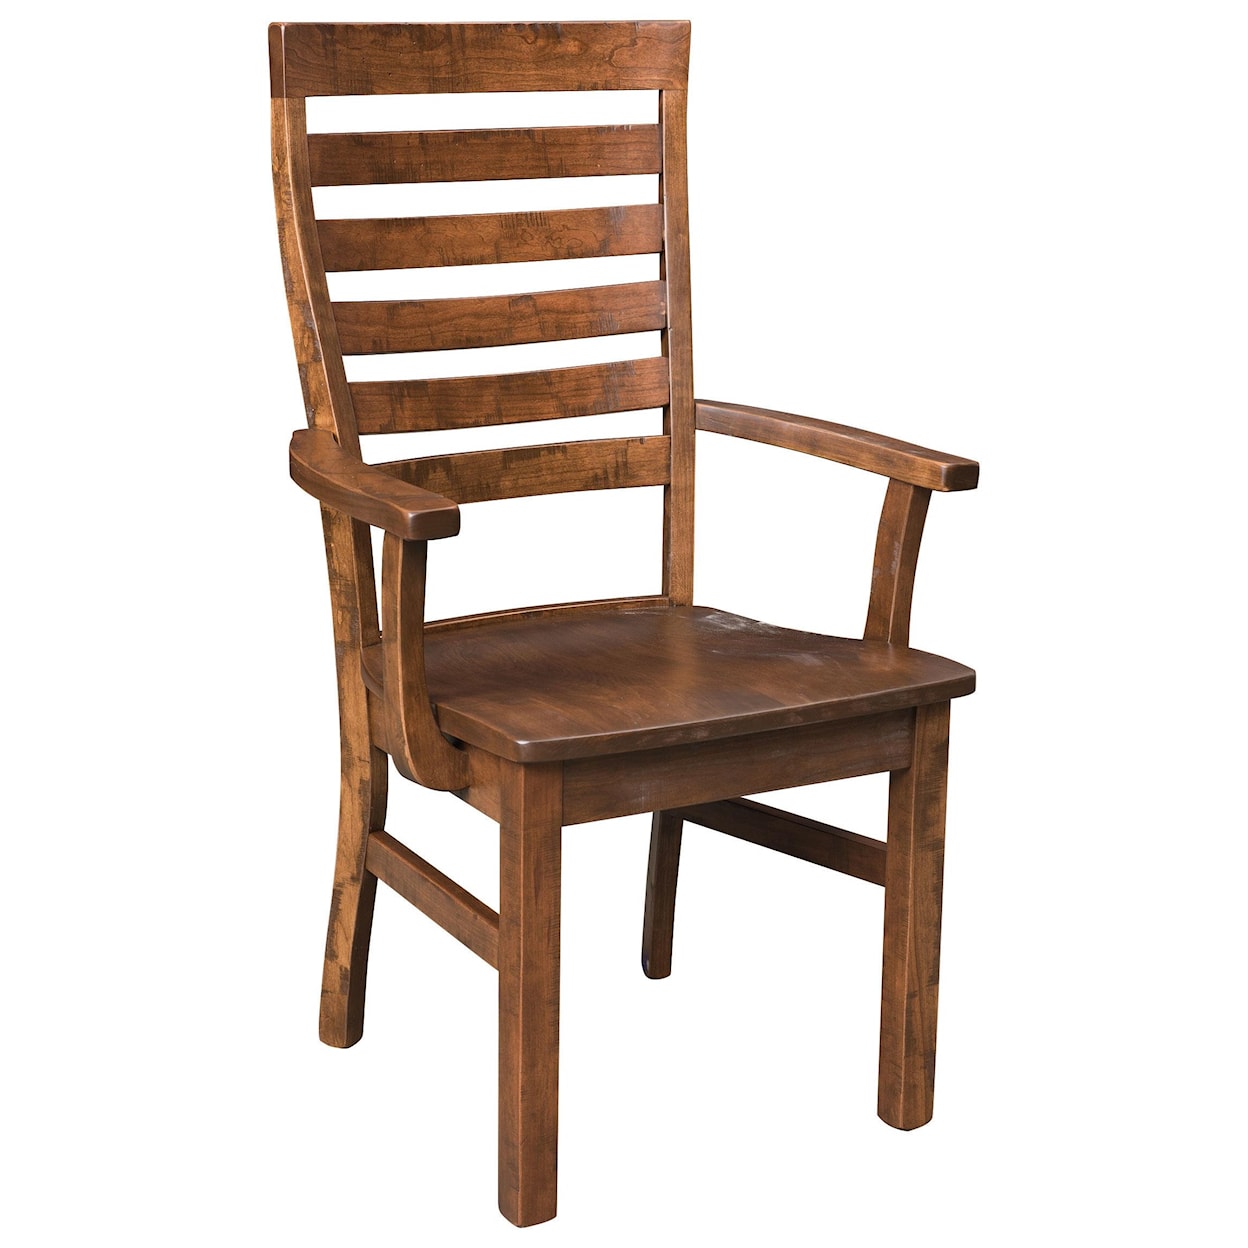 Wengerd Wood Products Logan Arm Chair